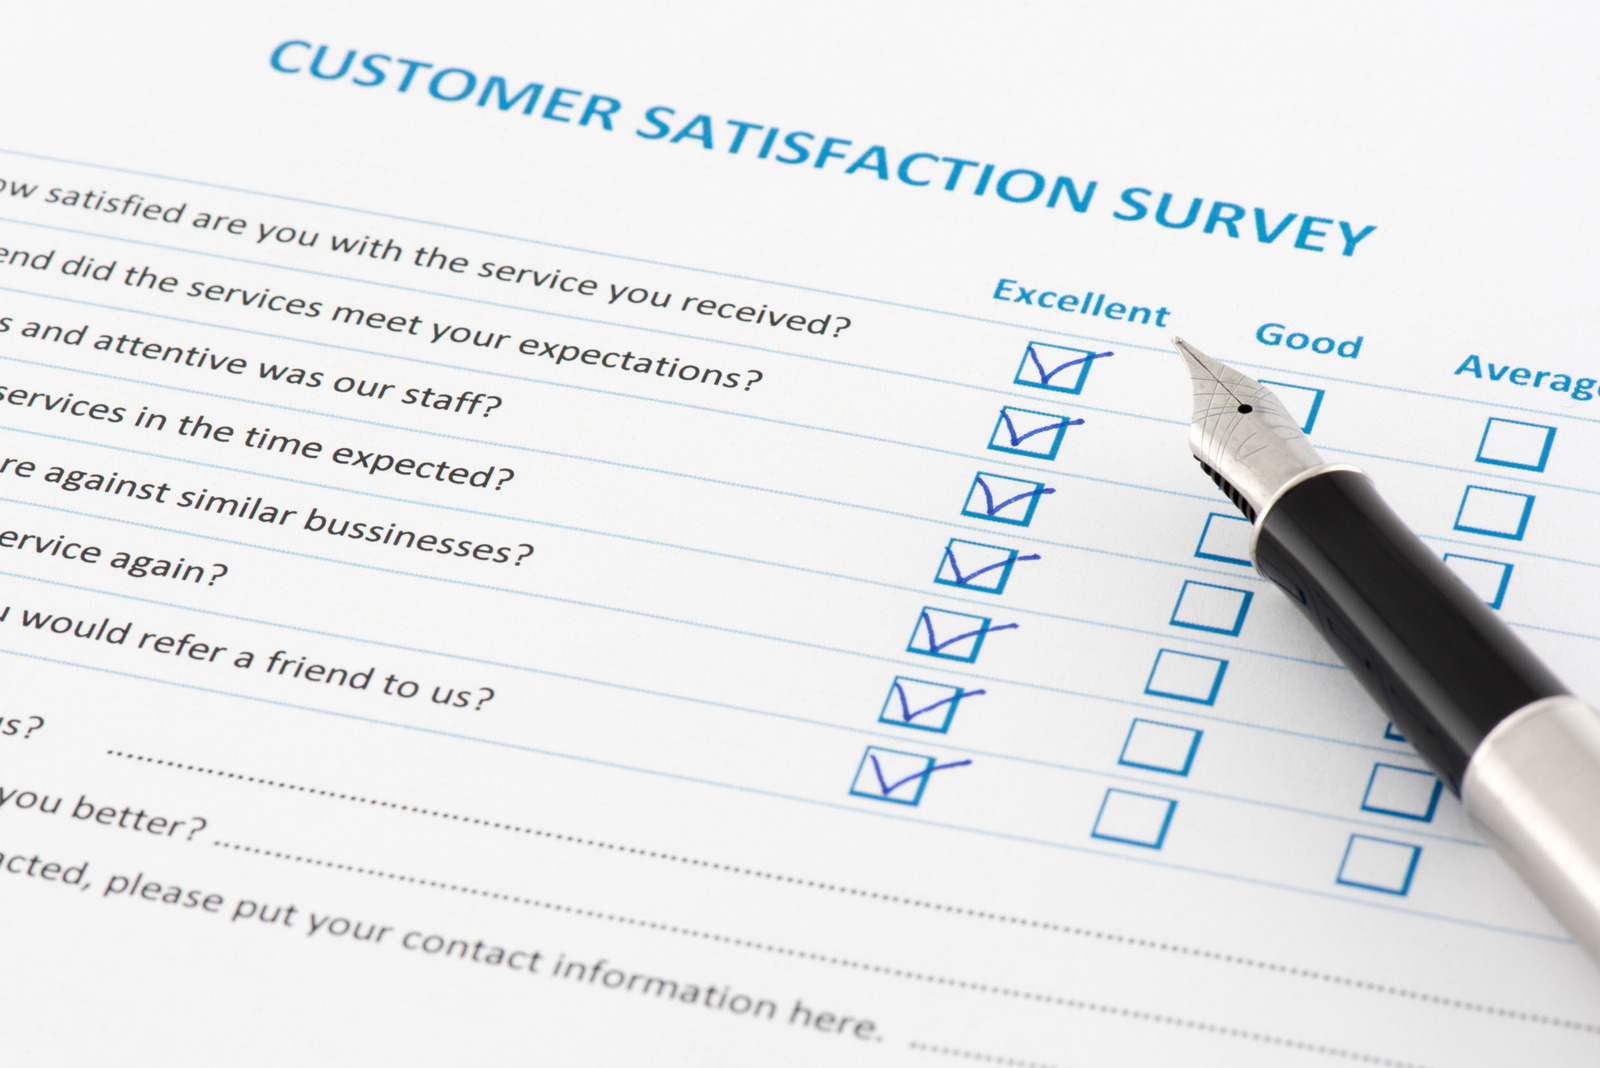 Common customer satisfaction survey questions